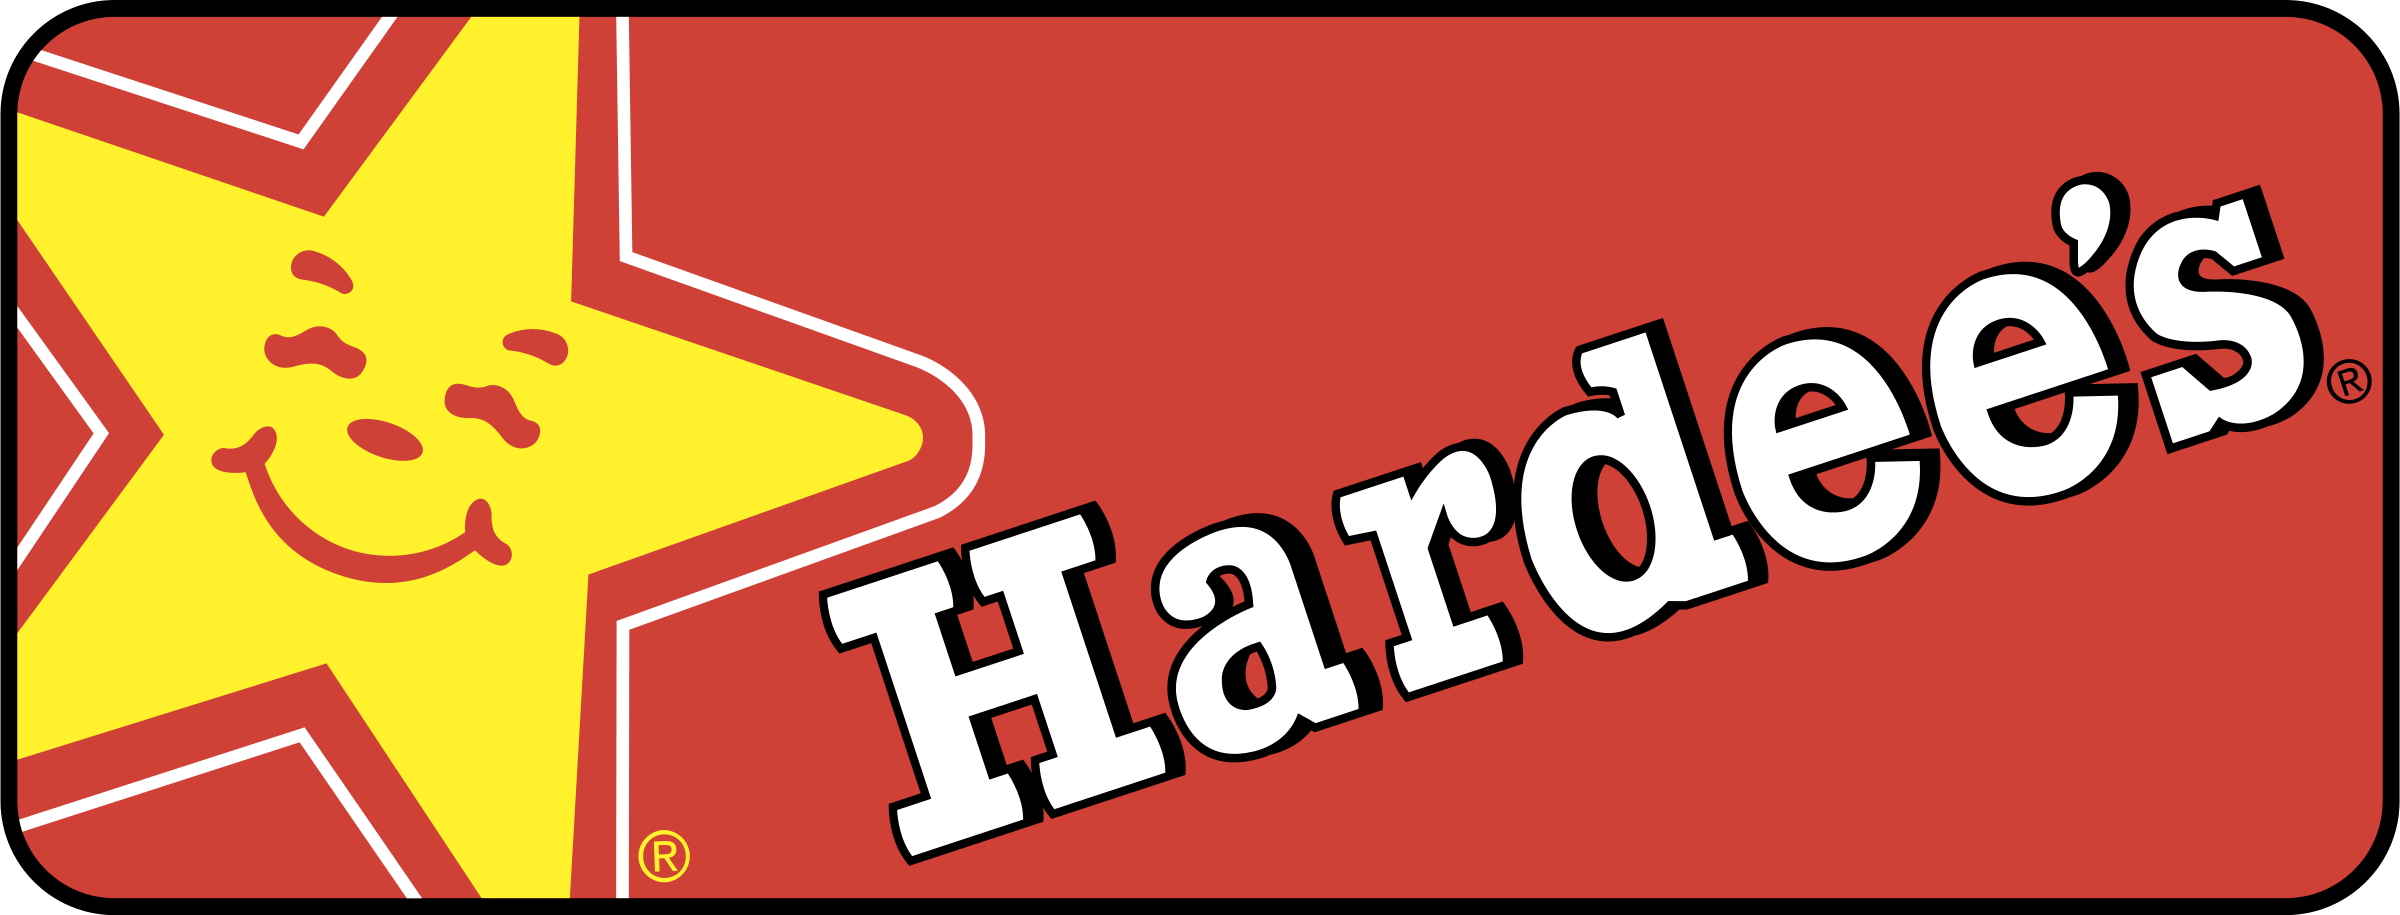 Hardee's Logo - Hardee's Logo PNG Transparent & SVG Vector - Freebie Supply